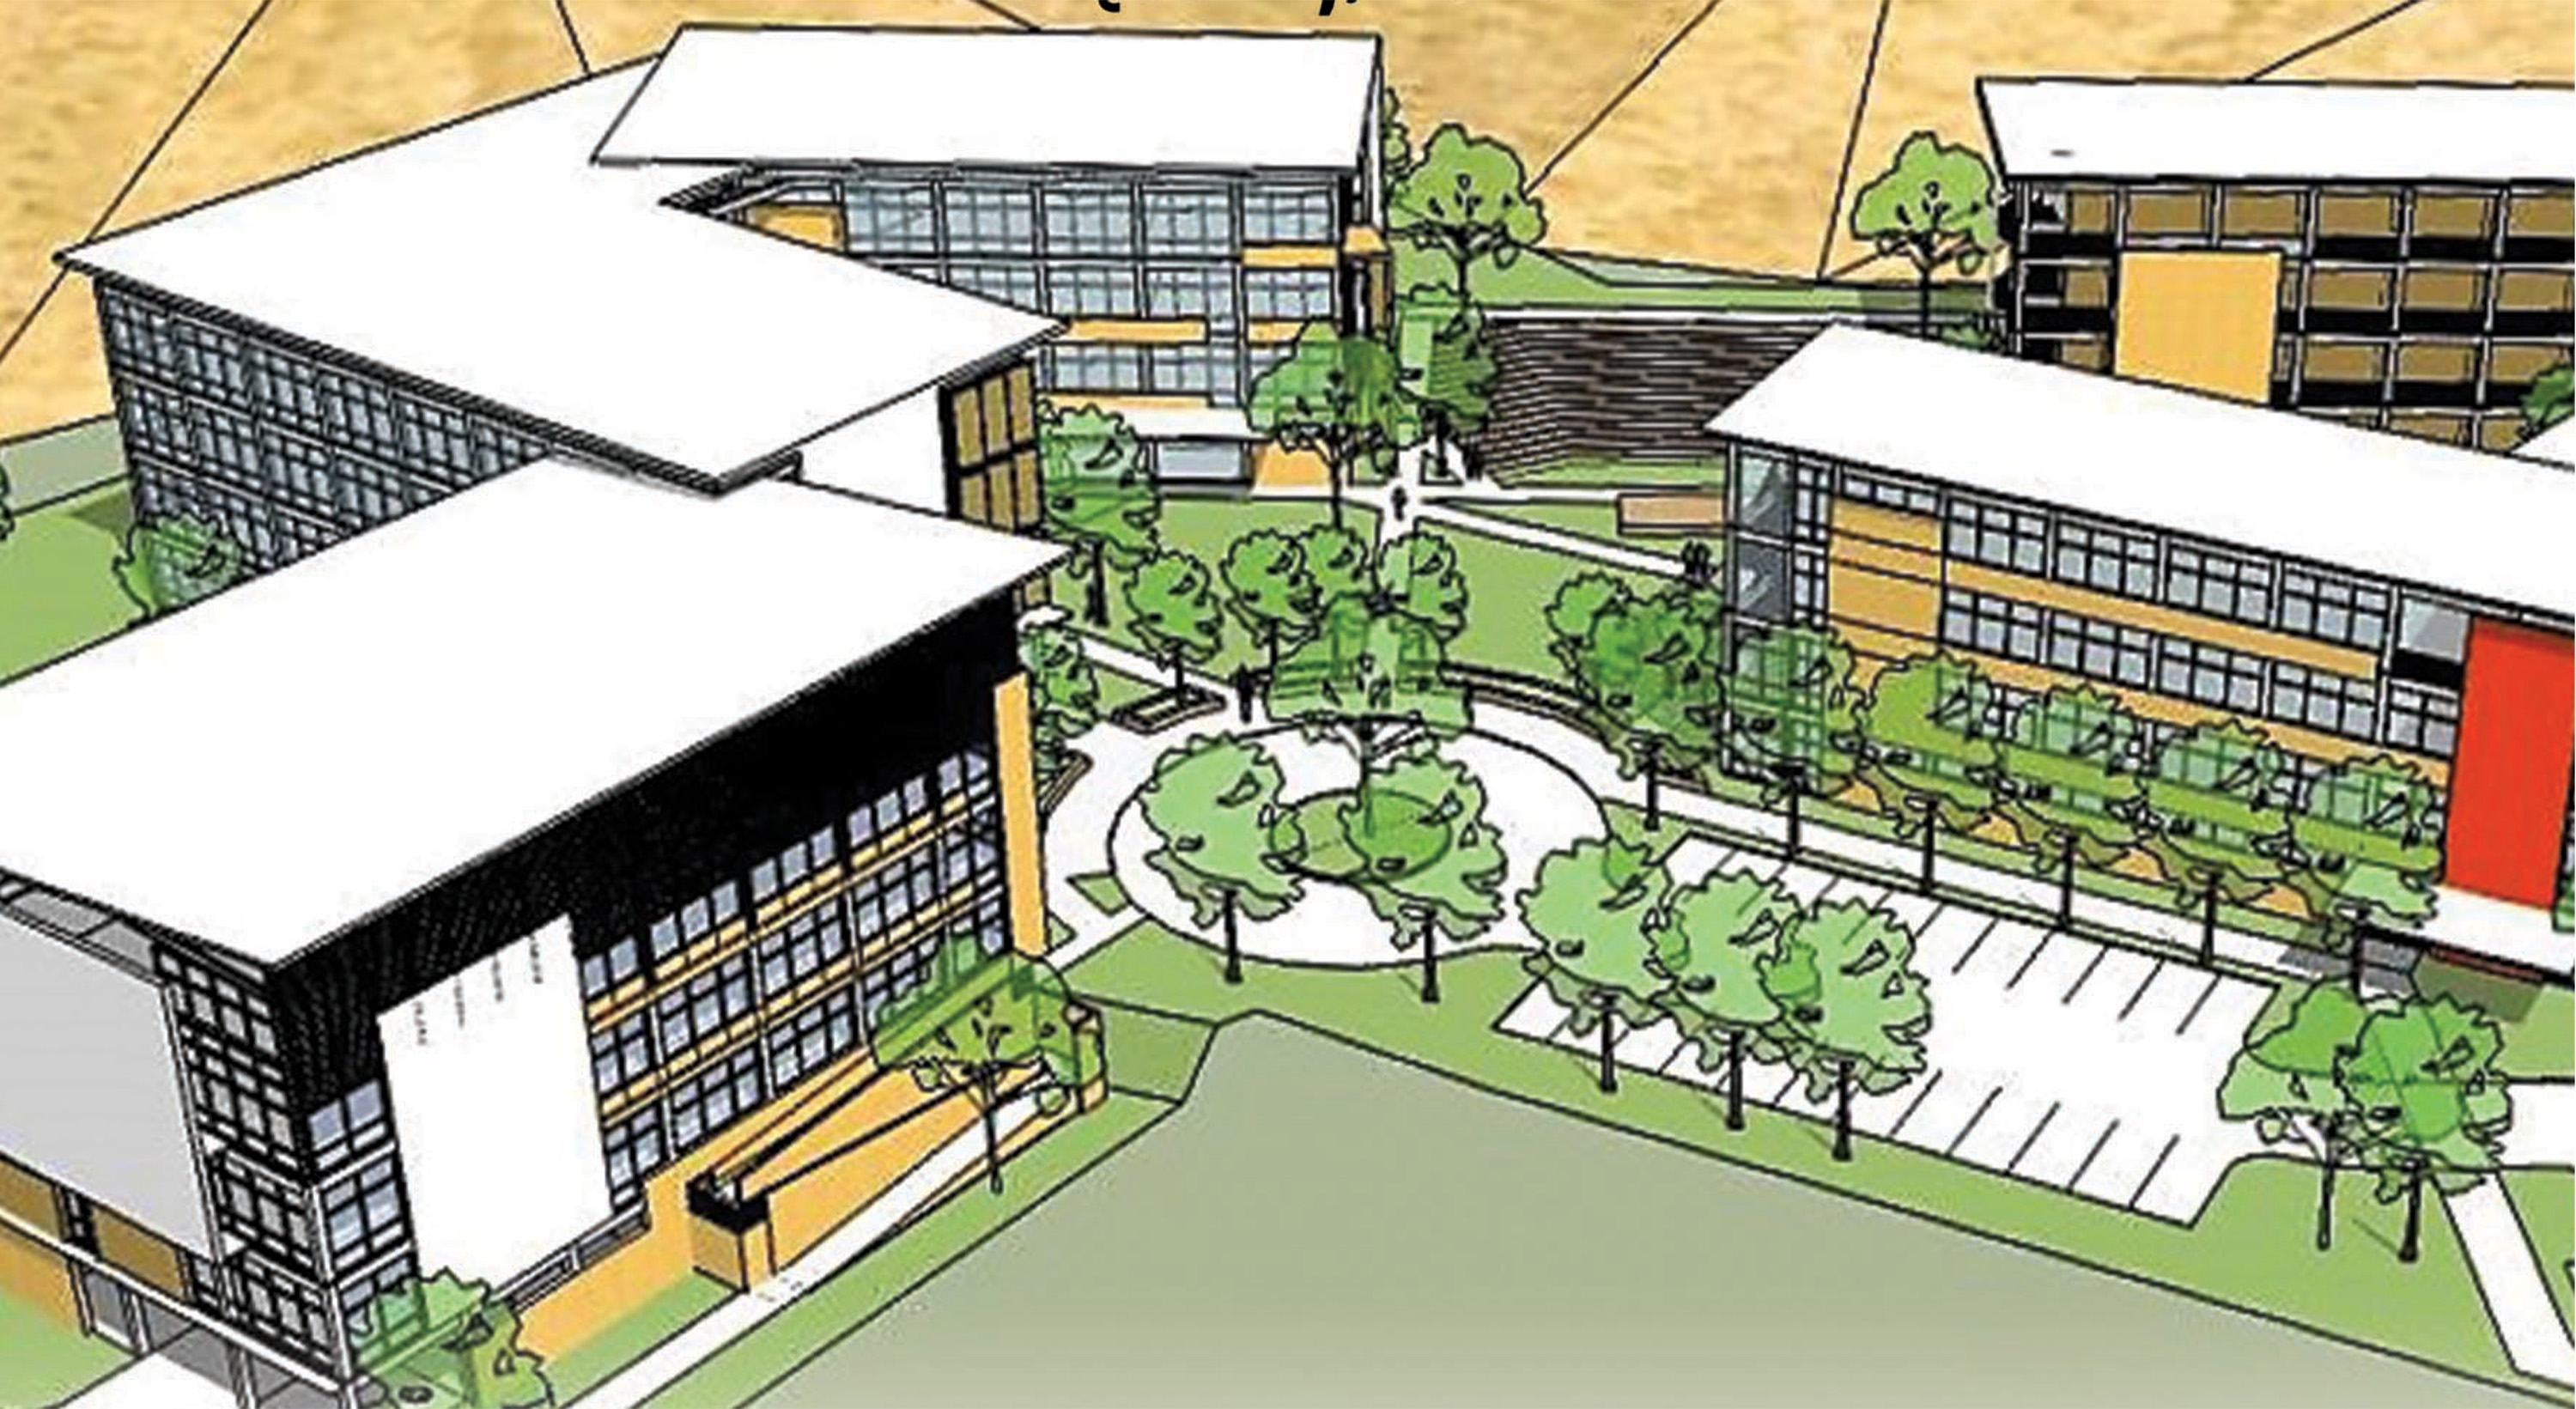 CIU Campus Construction (Phase 1)